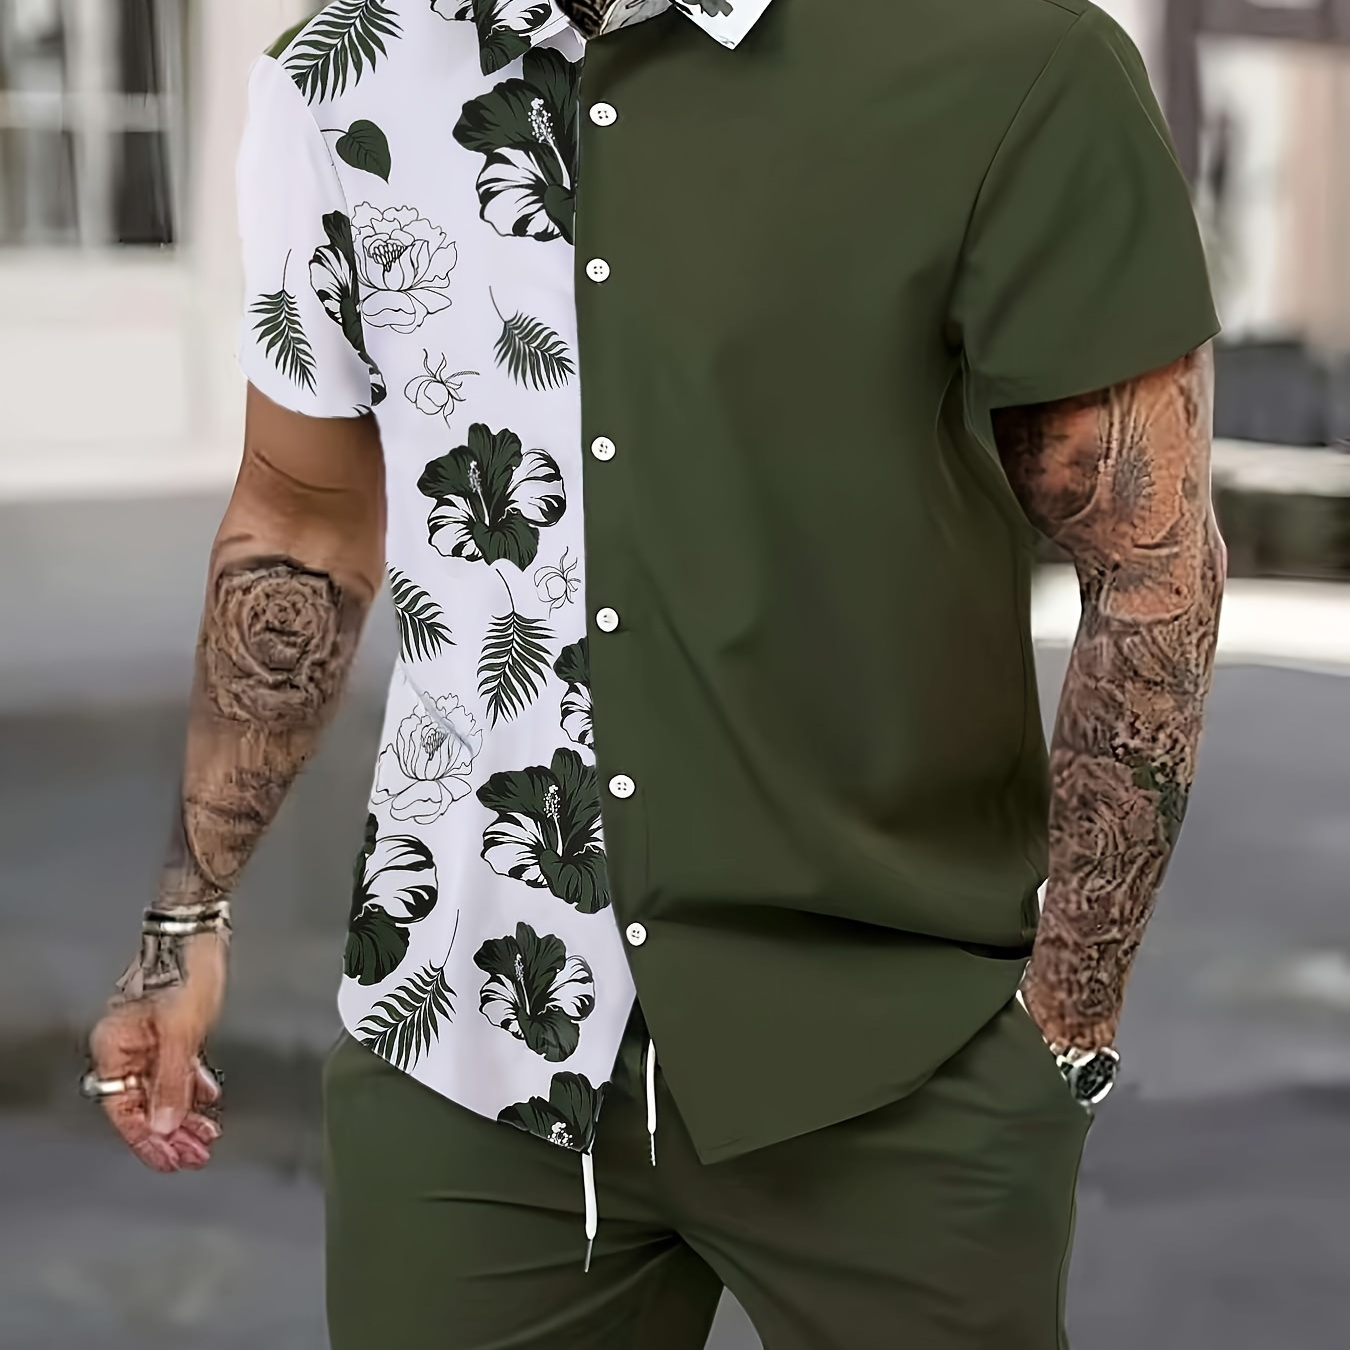 

2-piece Men's Stylish Summer Vacation Outfit Set, Men's Floral Print Color Block Short Sleeve Lapel Shirt & Solid Drawstring Shorts Set